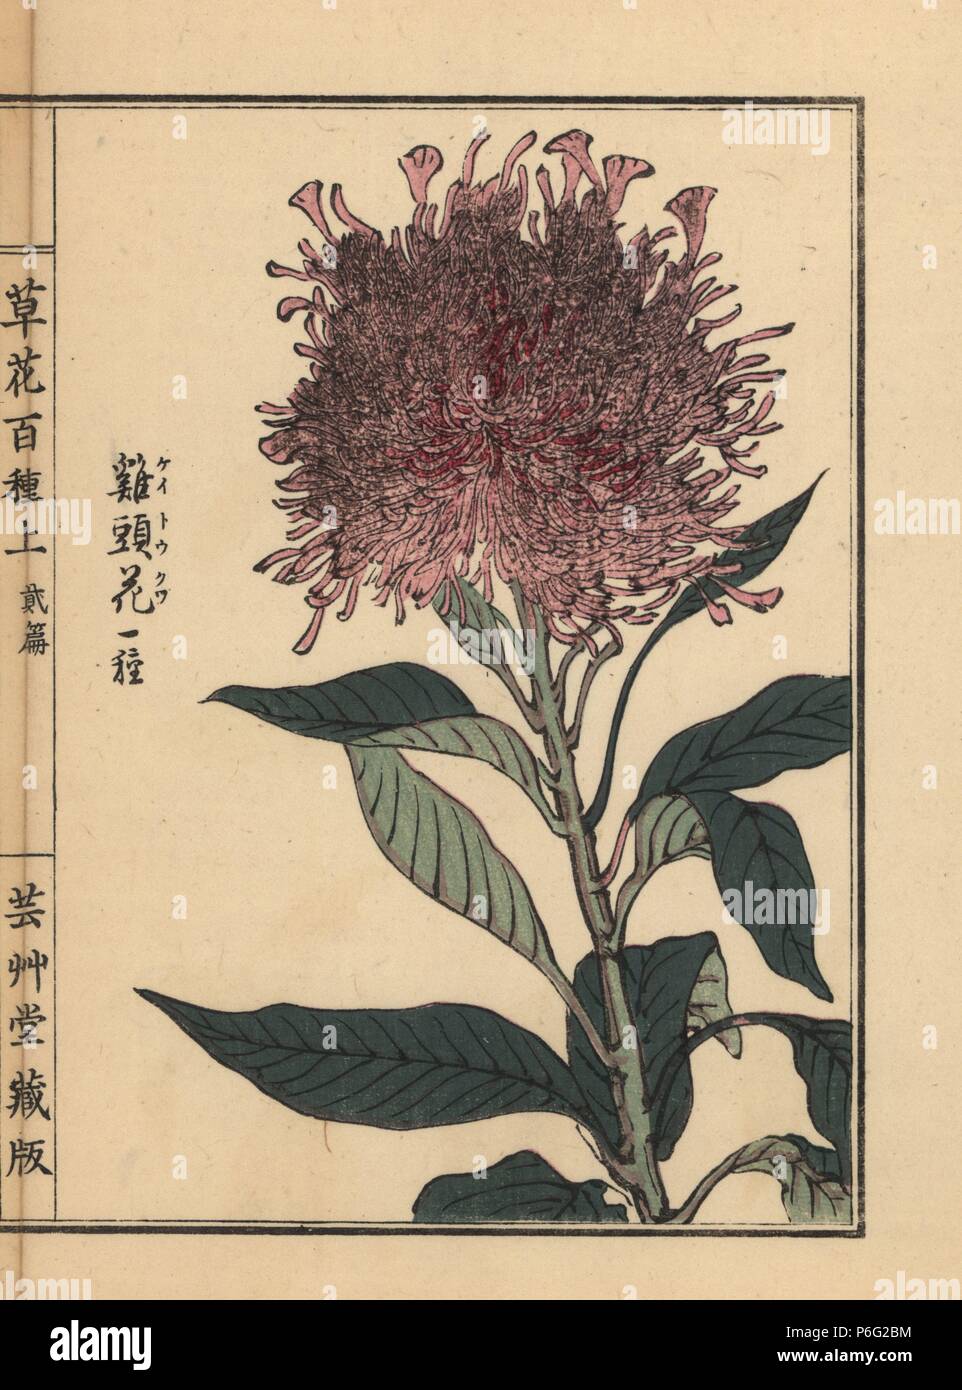 Keitou or plumed cockscomb variety, Celosia argentea. Handcoloured woodblock print by Kono Bairei from Kusa Bana Hyakushu (One Hundred Varieties of Flowers), Tokyo, Yamada, 1901. Stock Photo